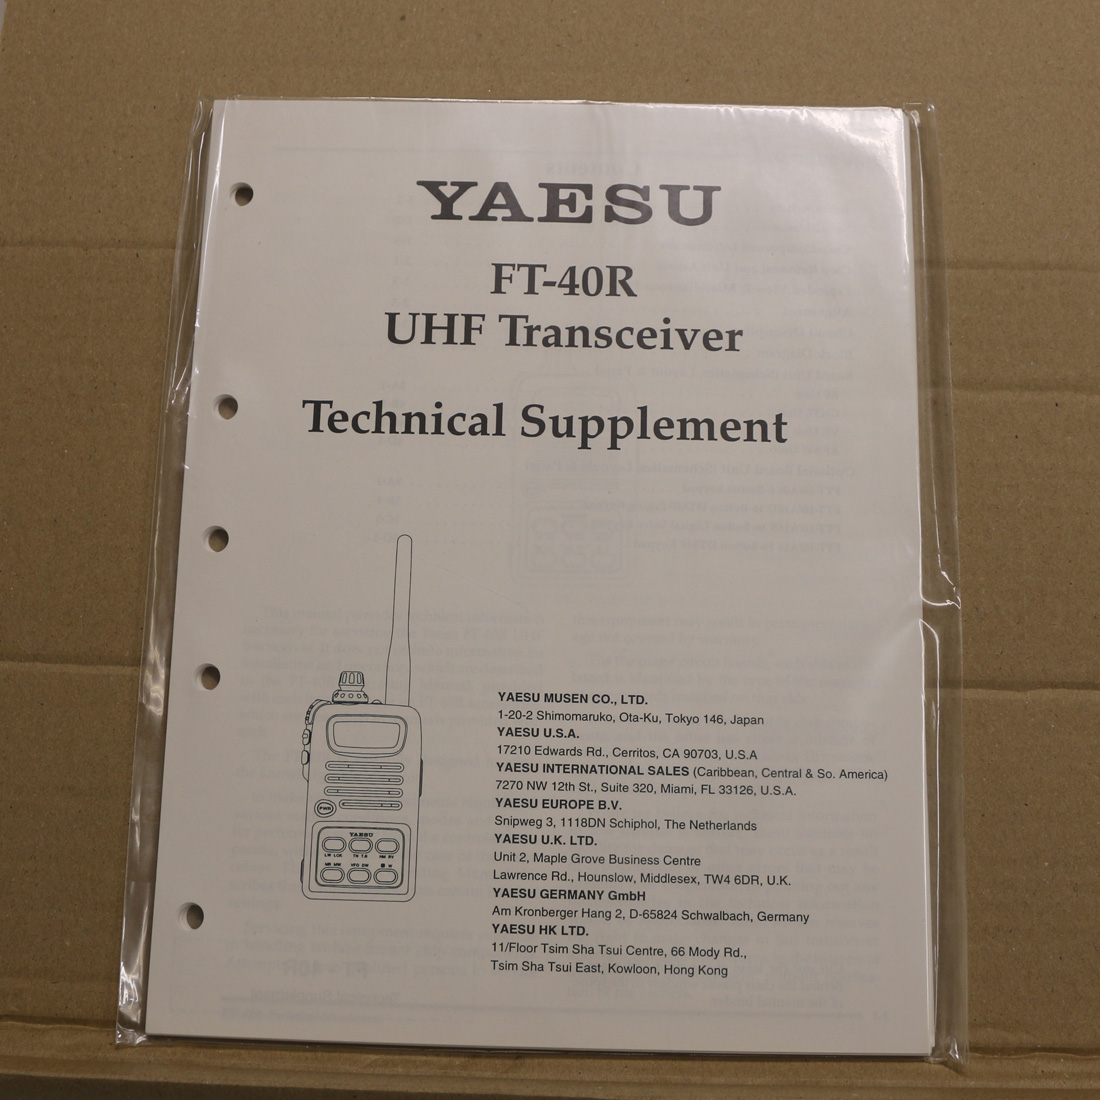 Yaesu FT-40R Technical Supplement